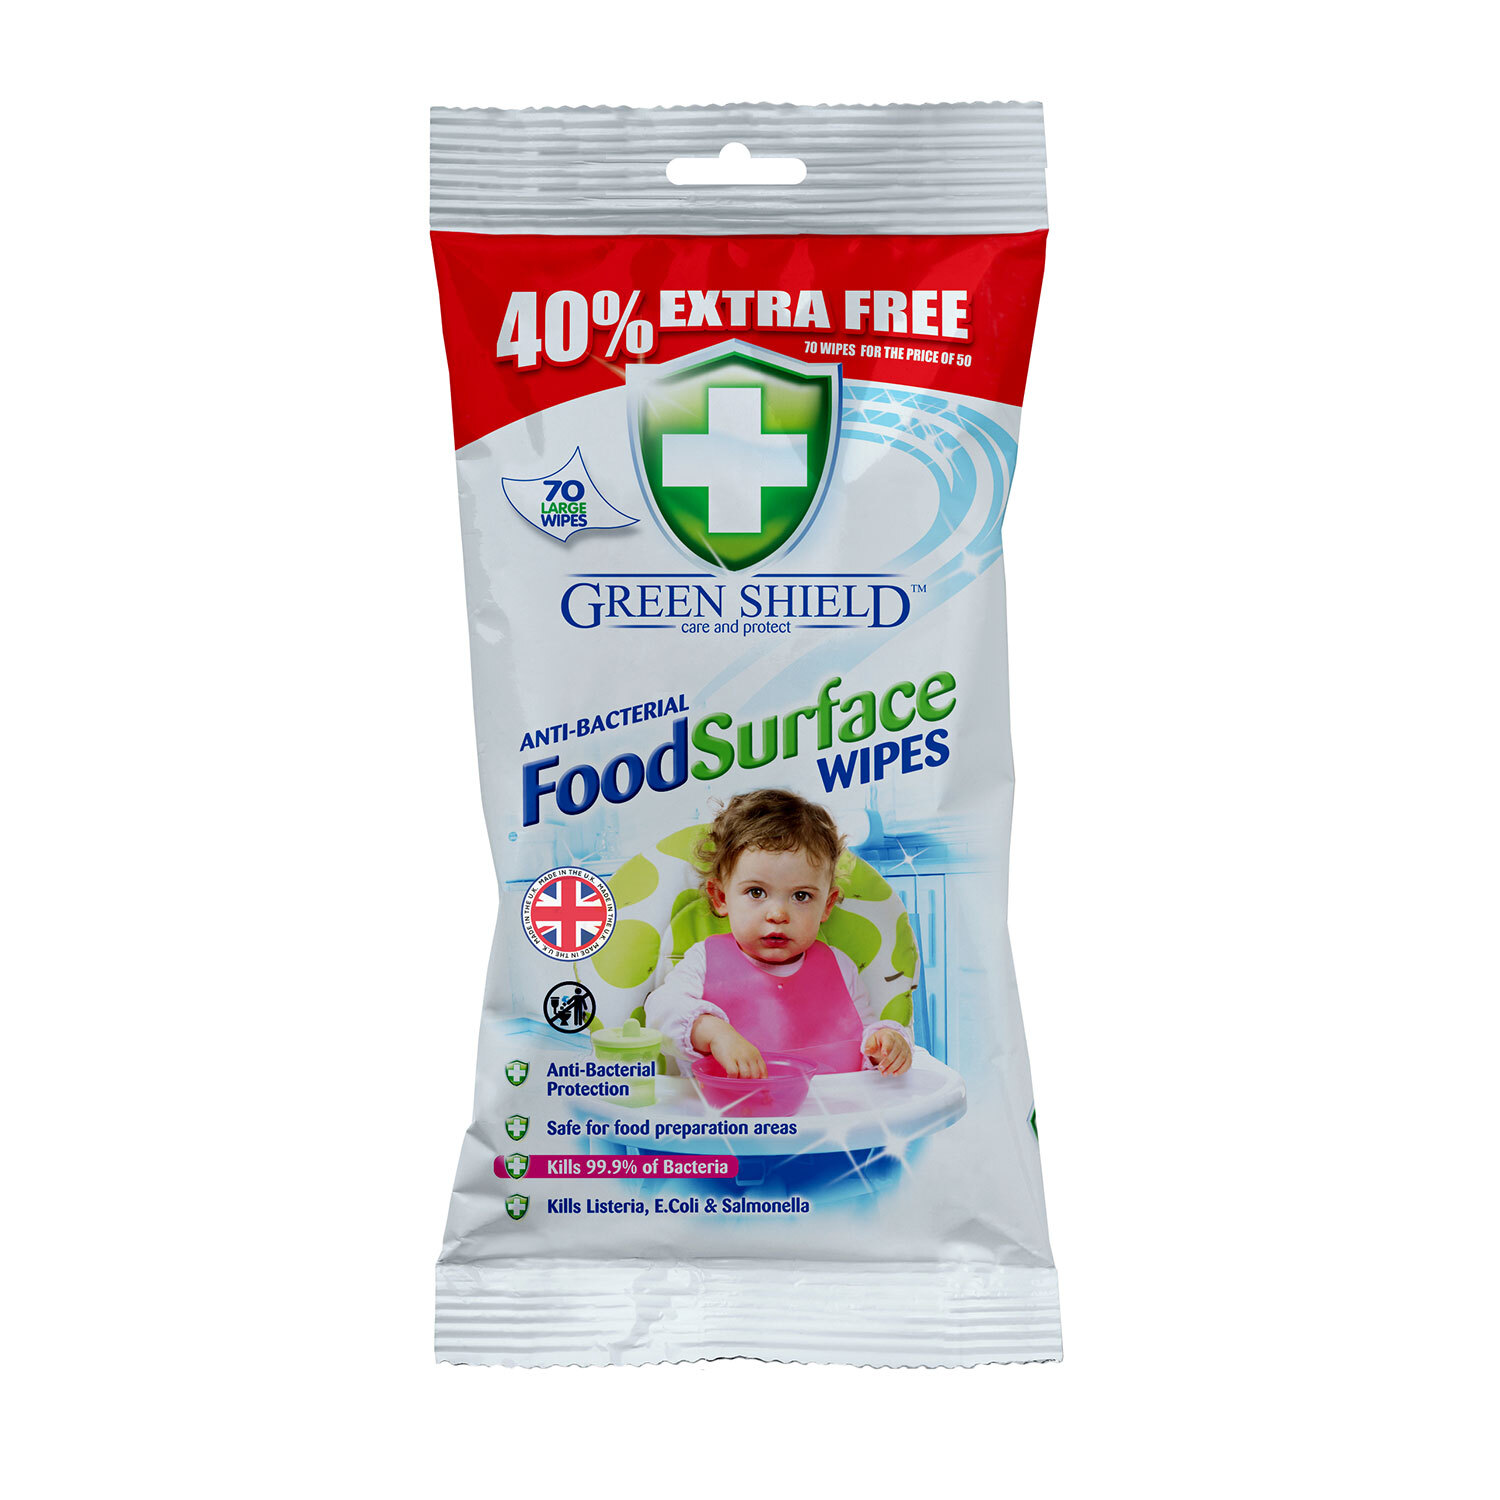 Greenshield Antibacterial Food Surface Wipes 70 Pack Image